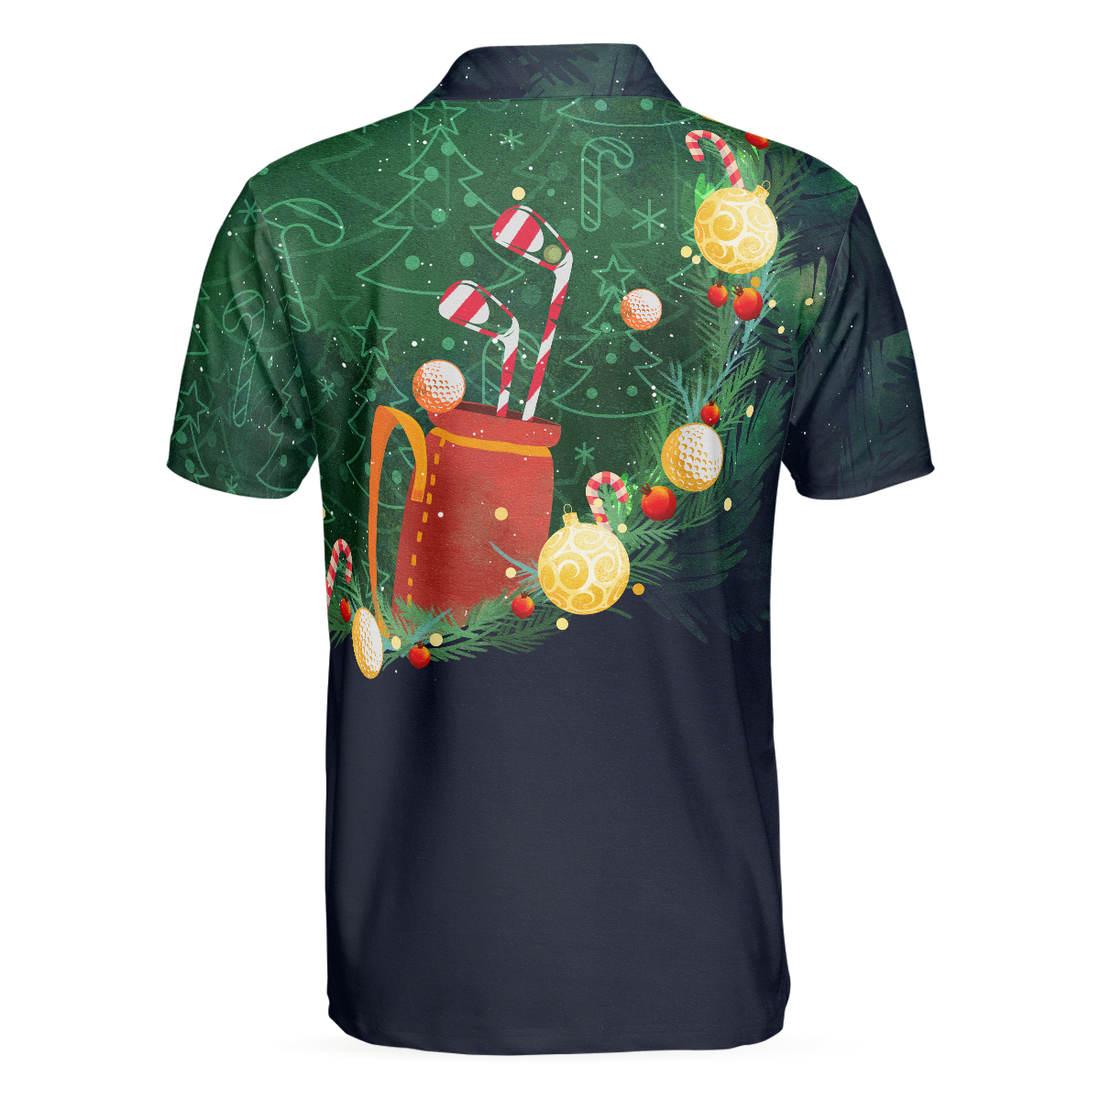 Christmas Golf Polo Shirts- Mens Golf Polo Shirts Short Sleeve- Santa Playing Golf Pattern Shirt- Christmas Shirt Idea Gift For Men - 1